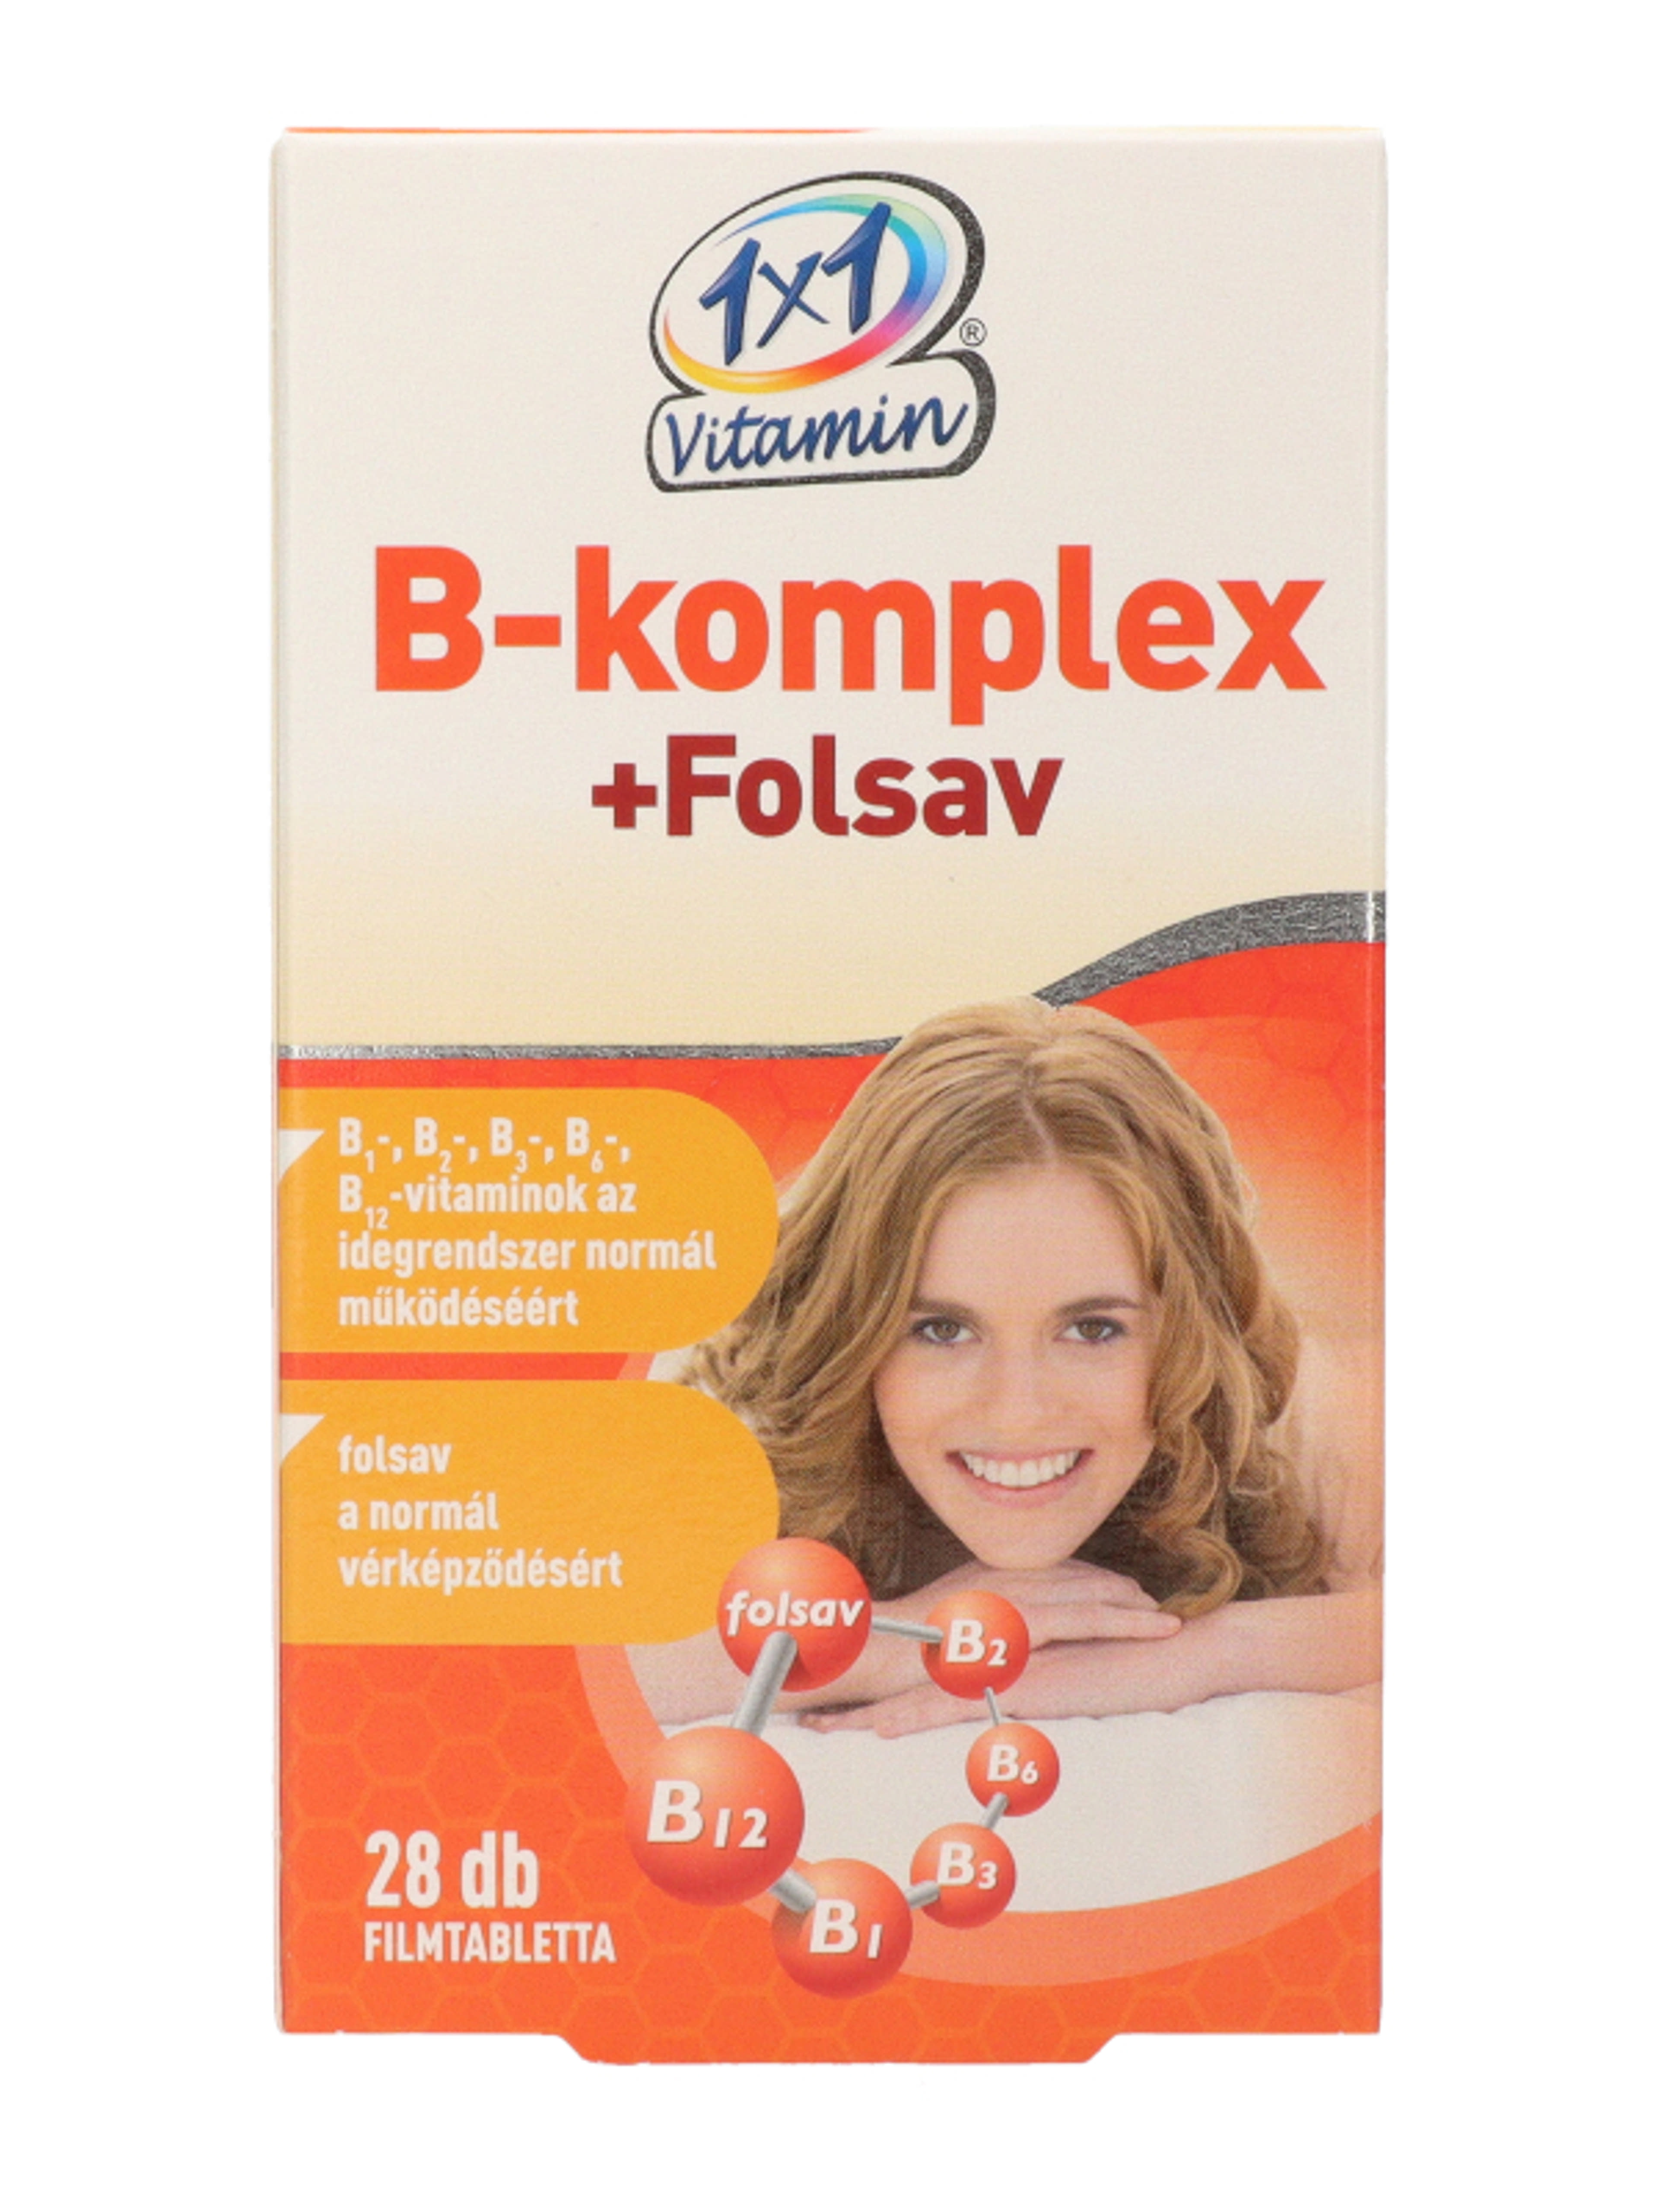 1×1 Vitamin B-komplex + folsav filmtabletta - 28 db-2